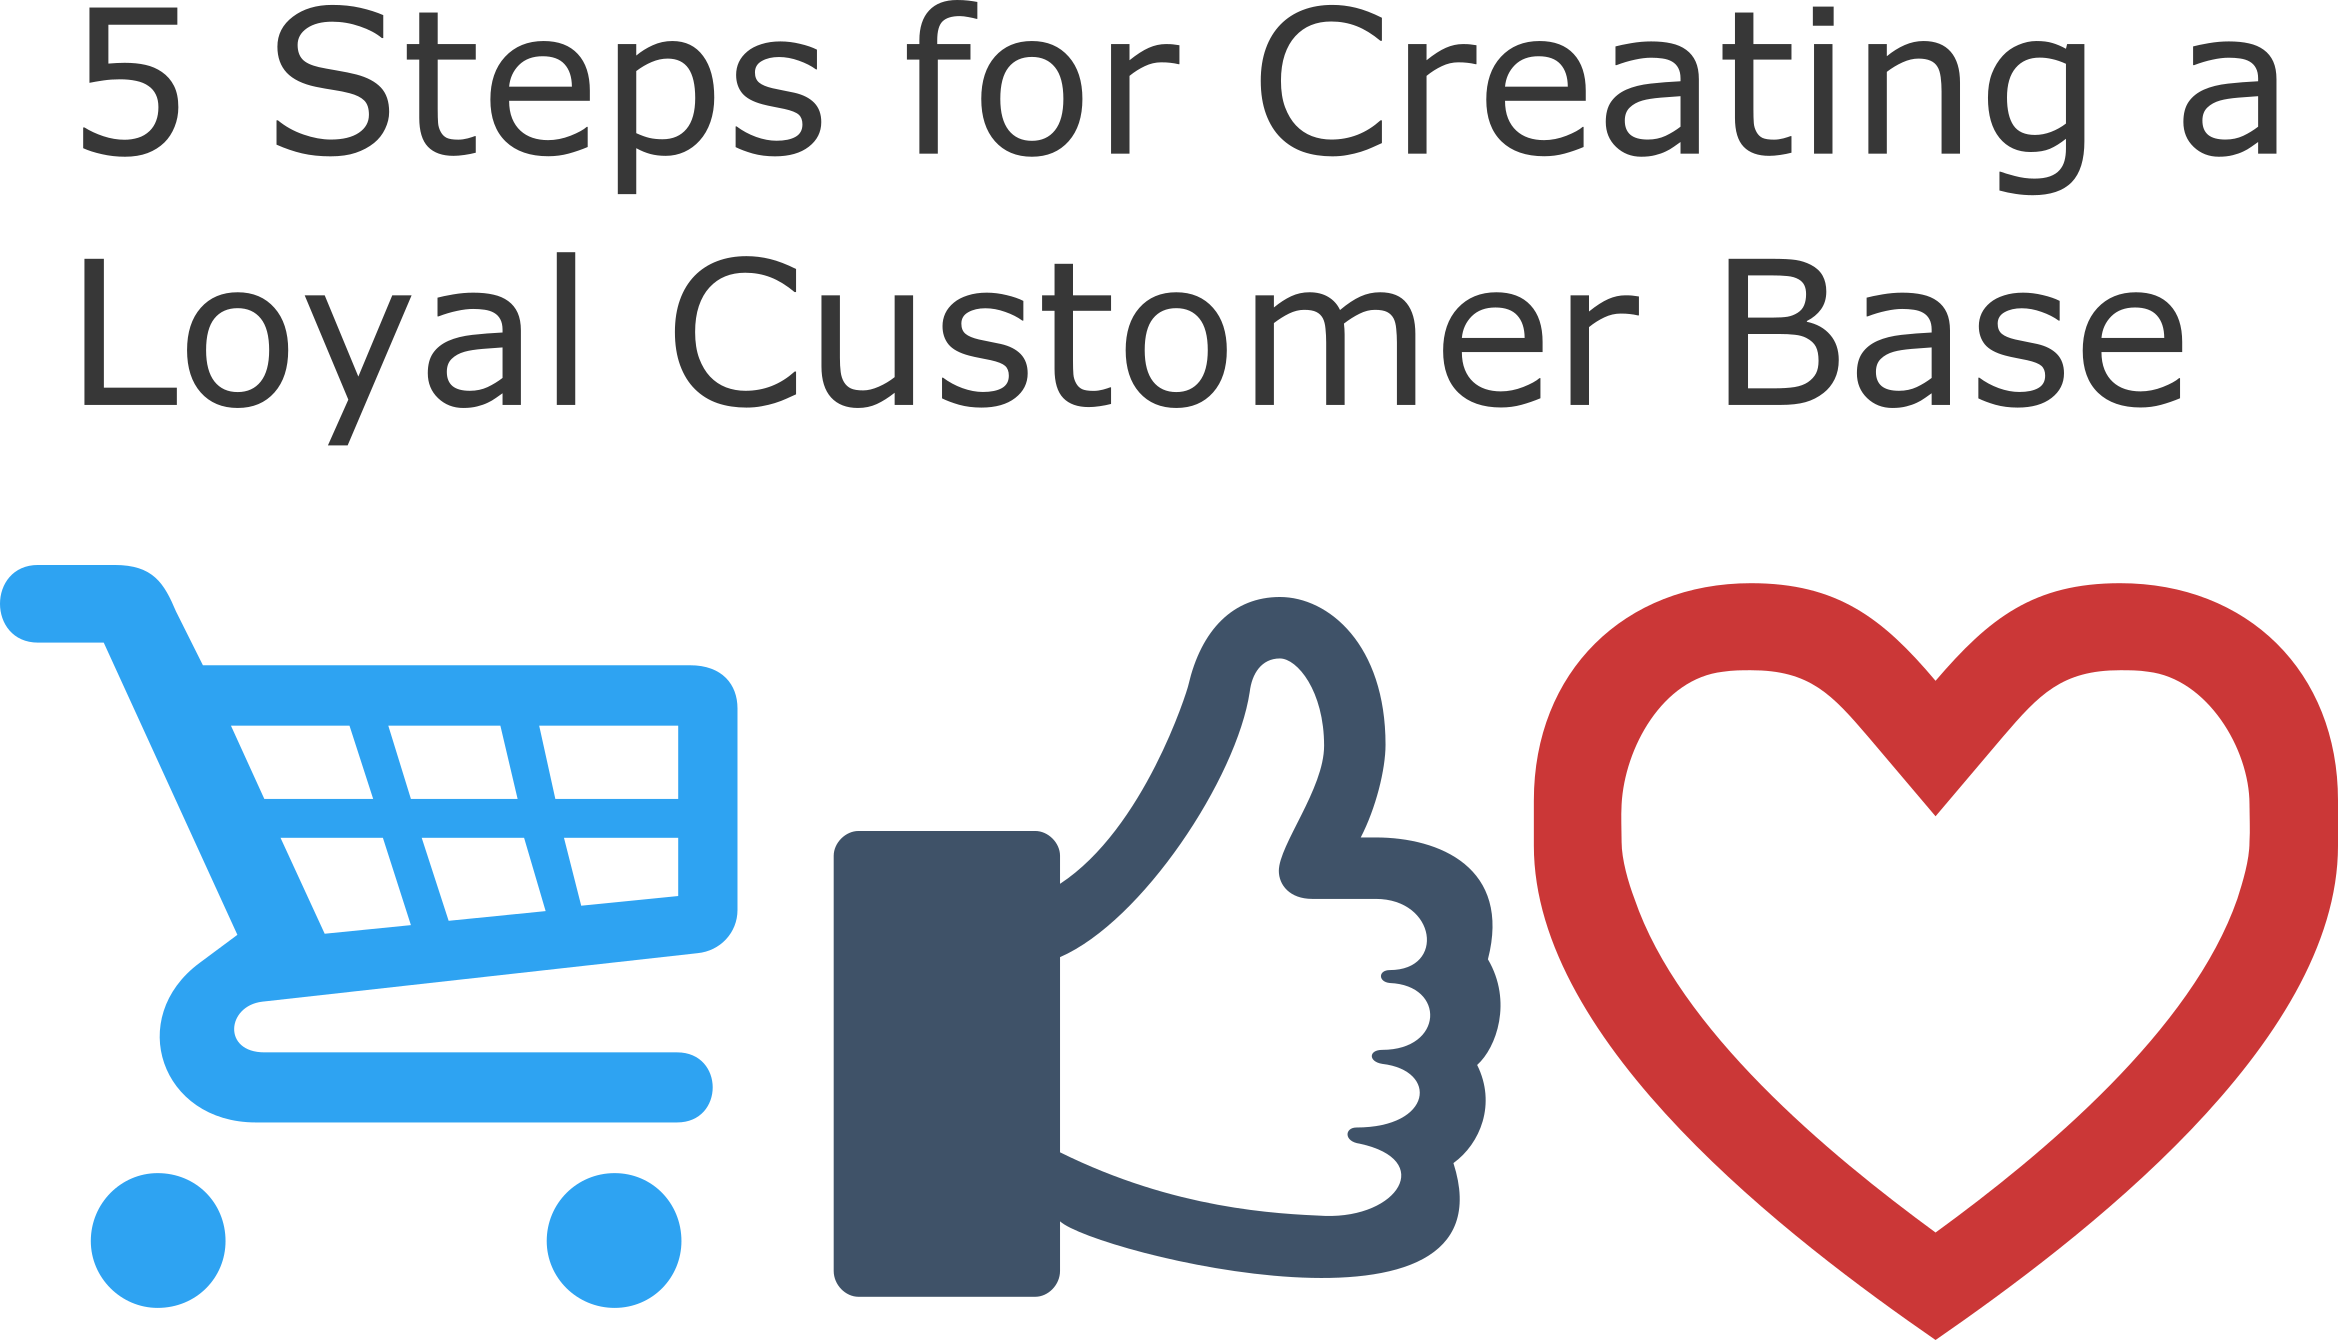 5 Steps for Creating a Loyal Customer Base | Minisoft, Inc.